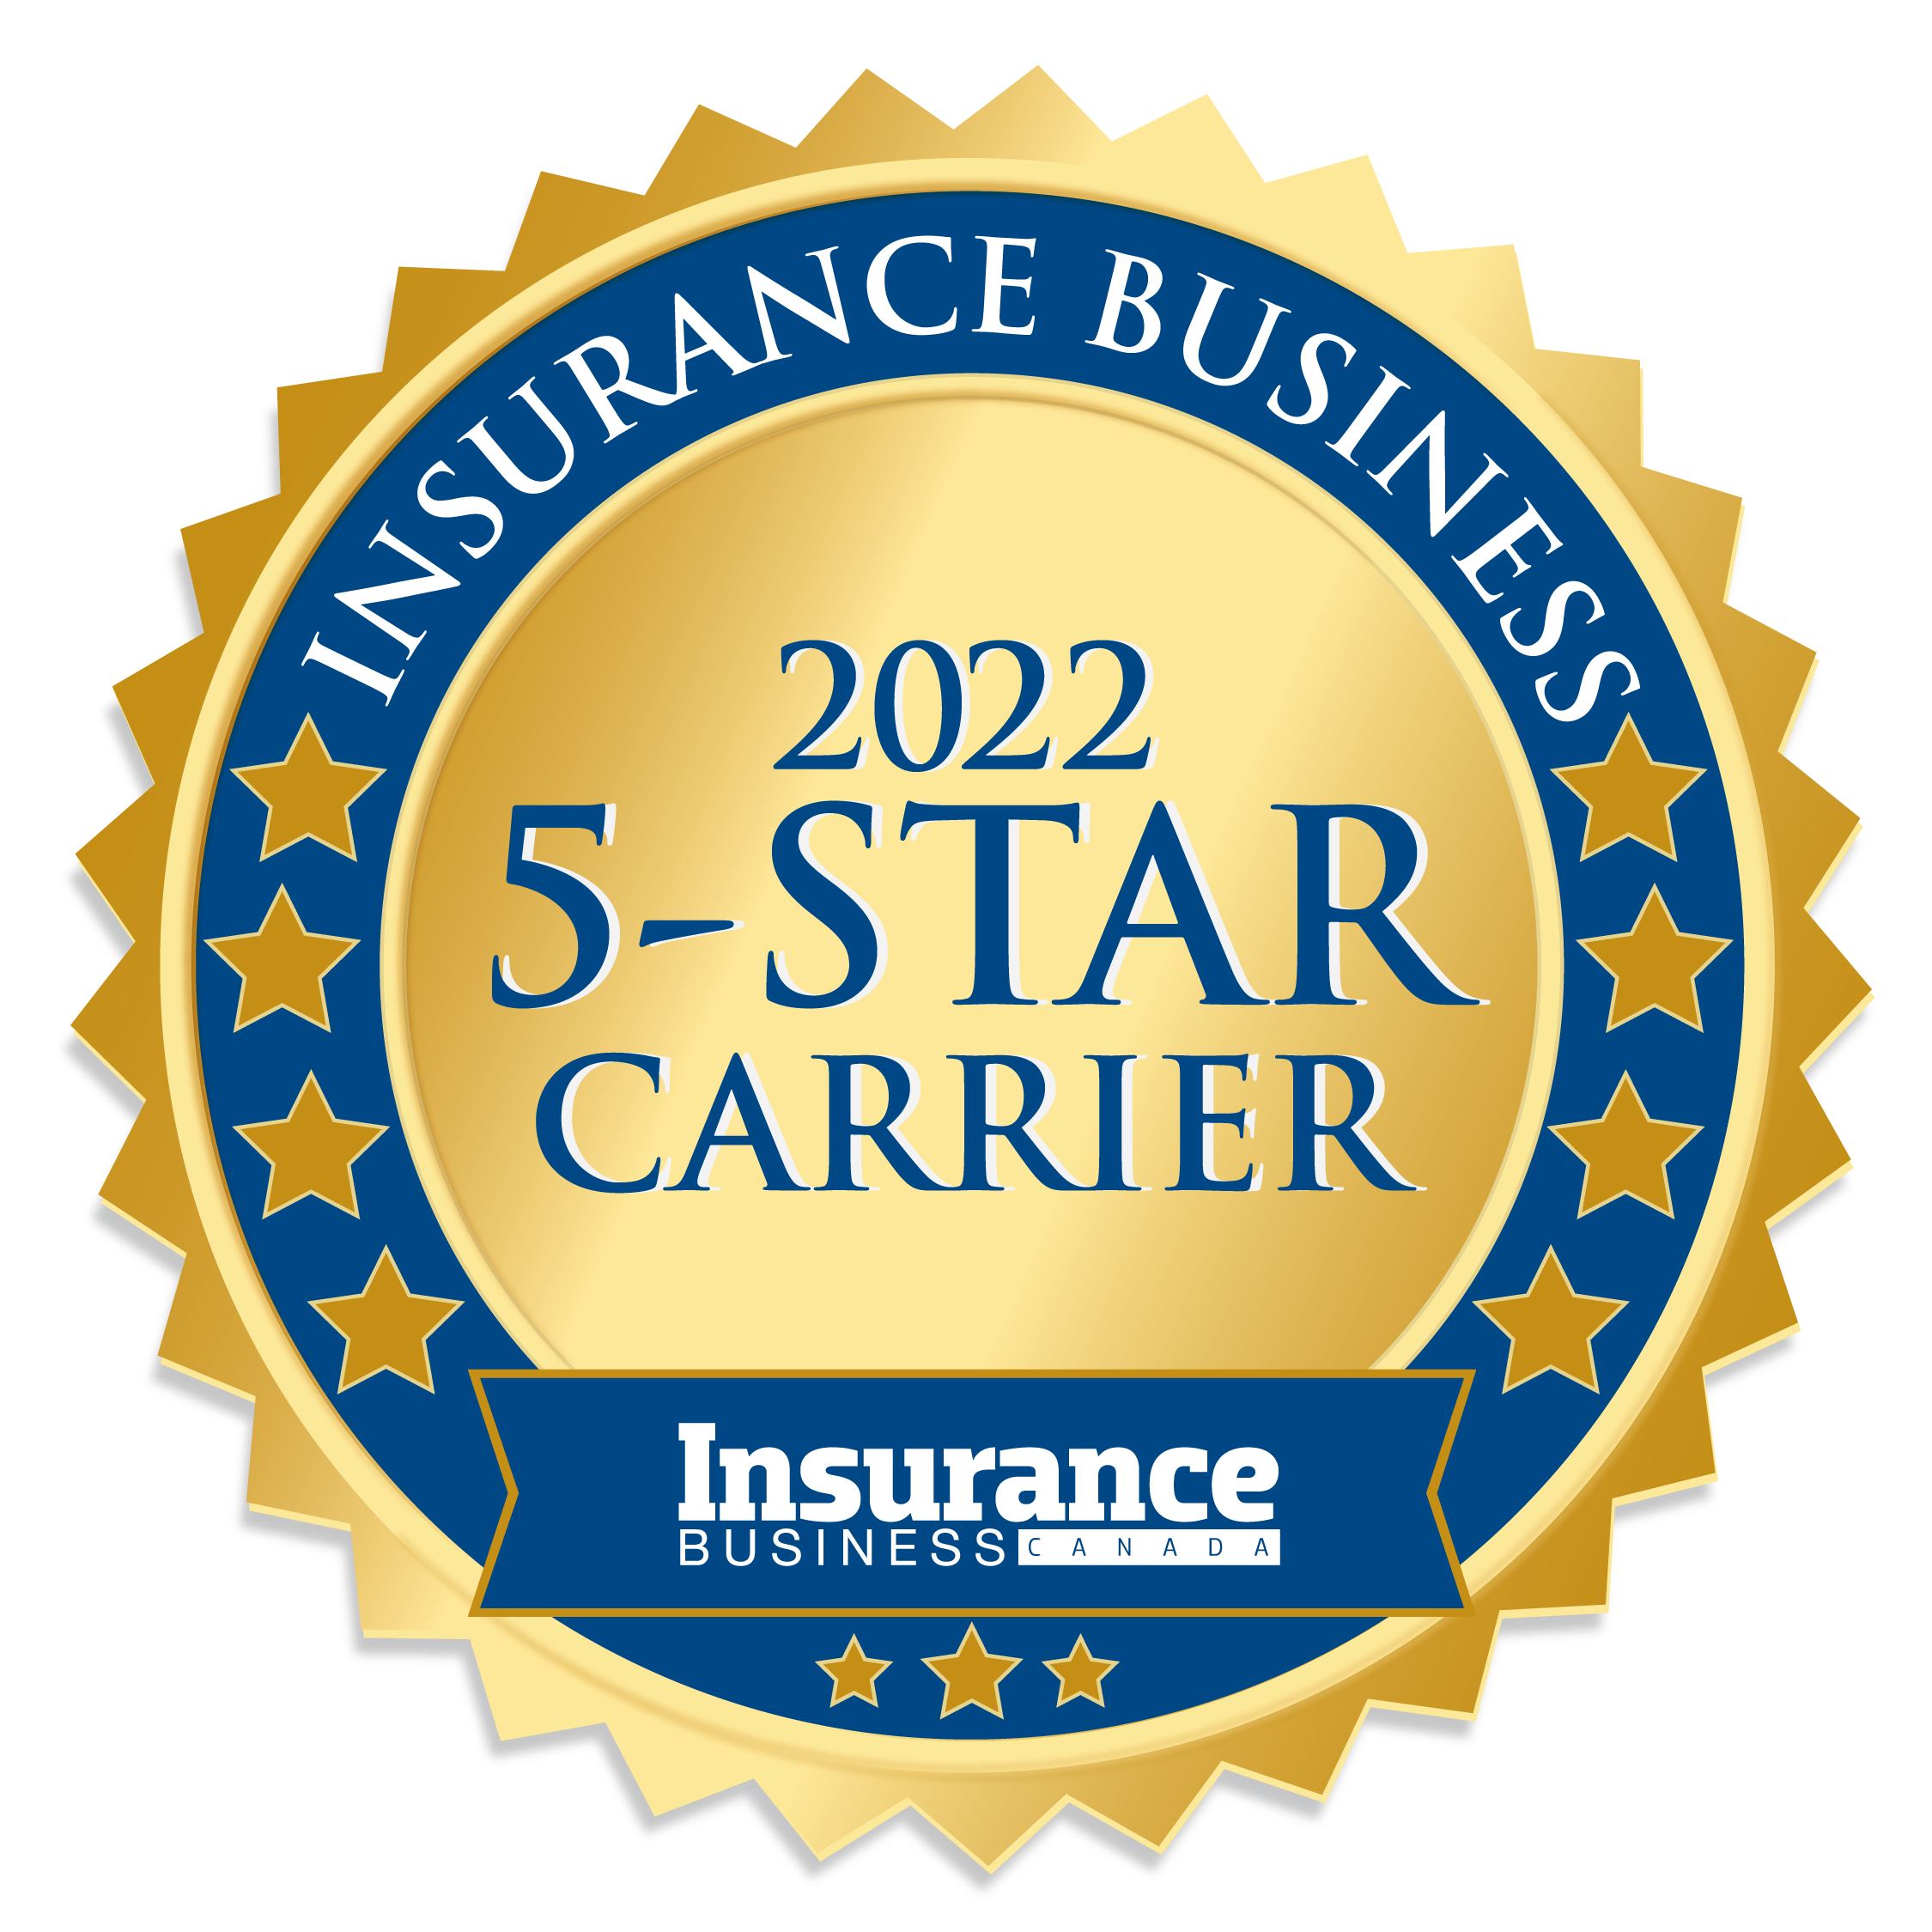 Five Star Insurance Carrier 2022